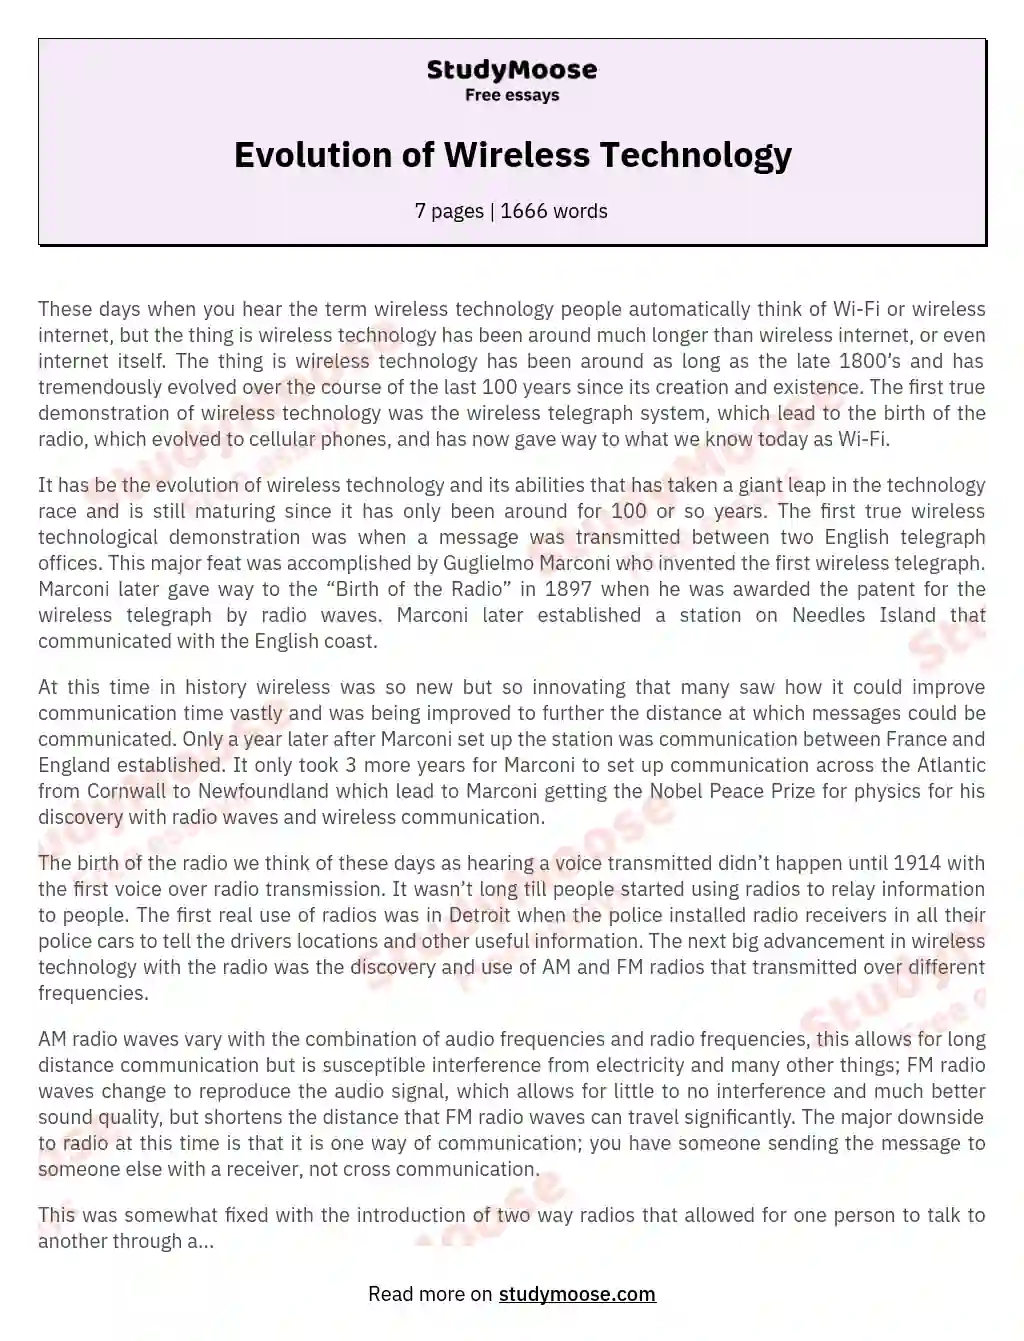 Evolution of Wireless Technology essay